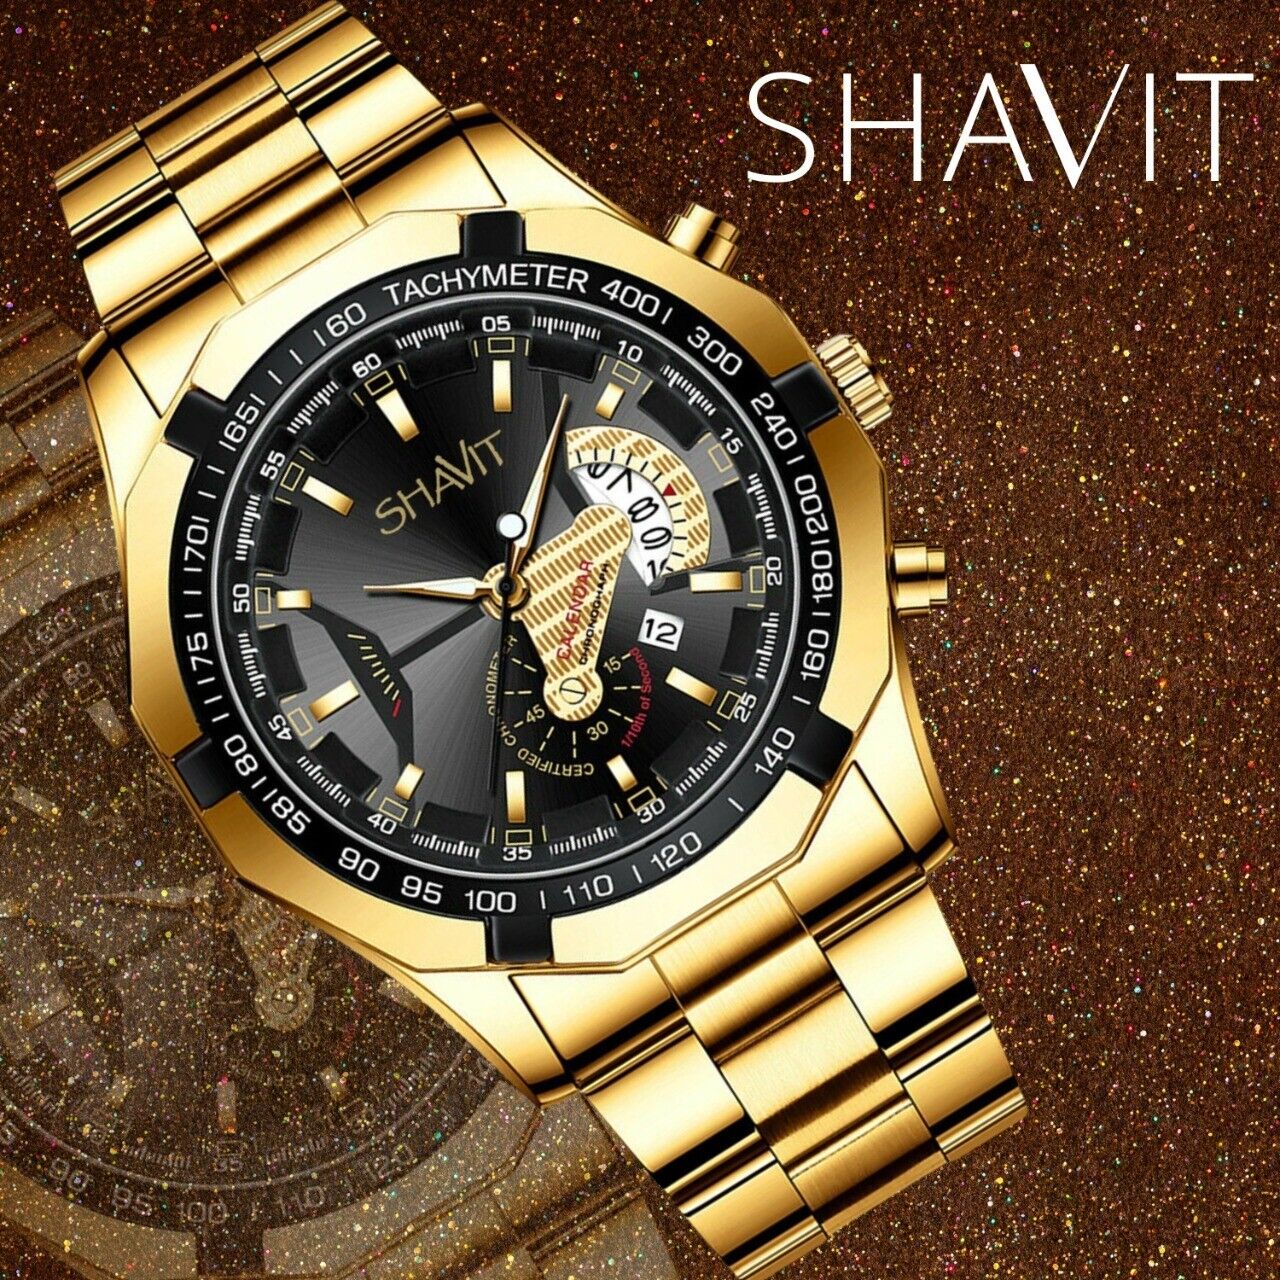 Gold Men's Watch Classic Stainless Steel Quartz Luxury Gift Wristwatch For MEN - Gold / Black